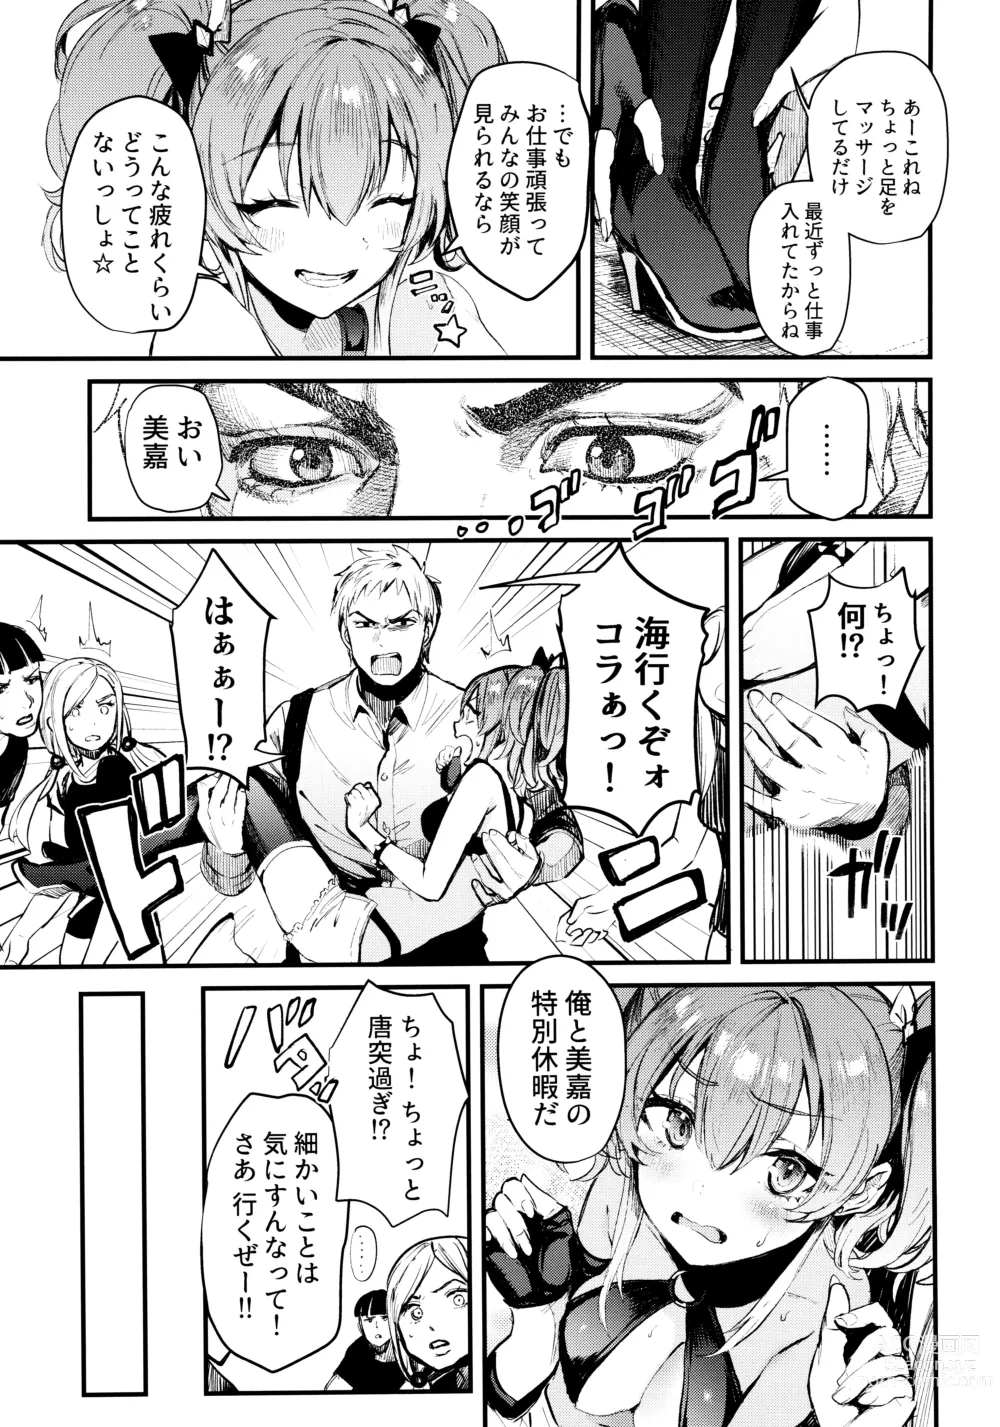 Page 6 of doujinshi Mika to Futari de.